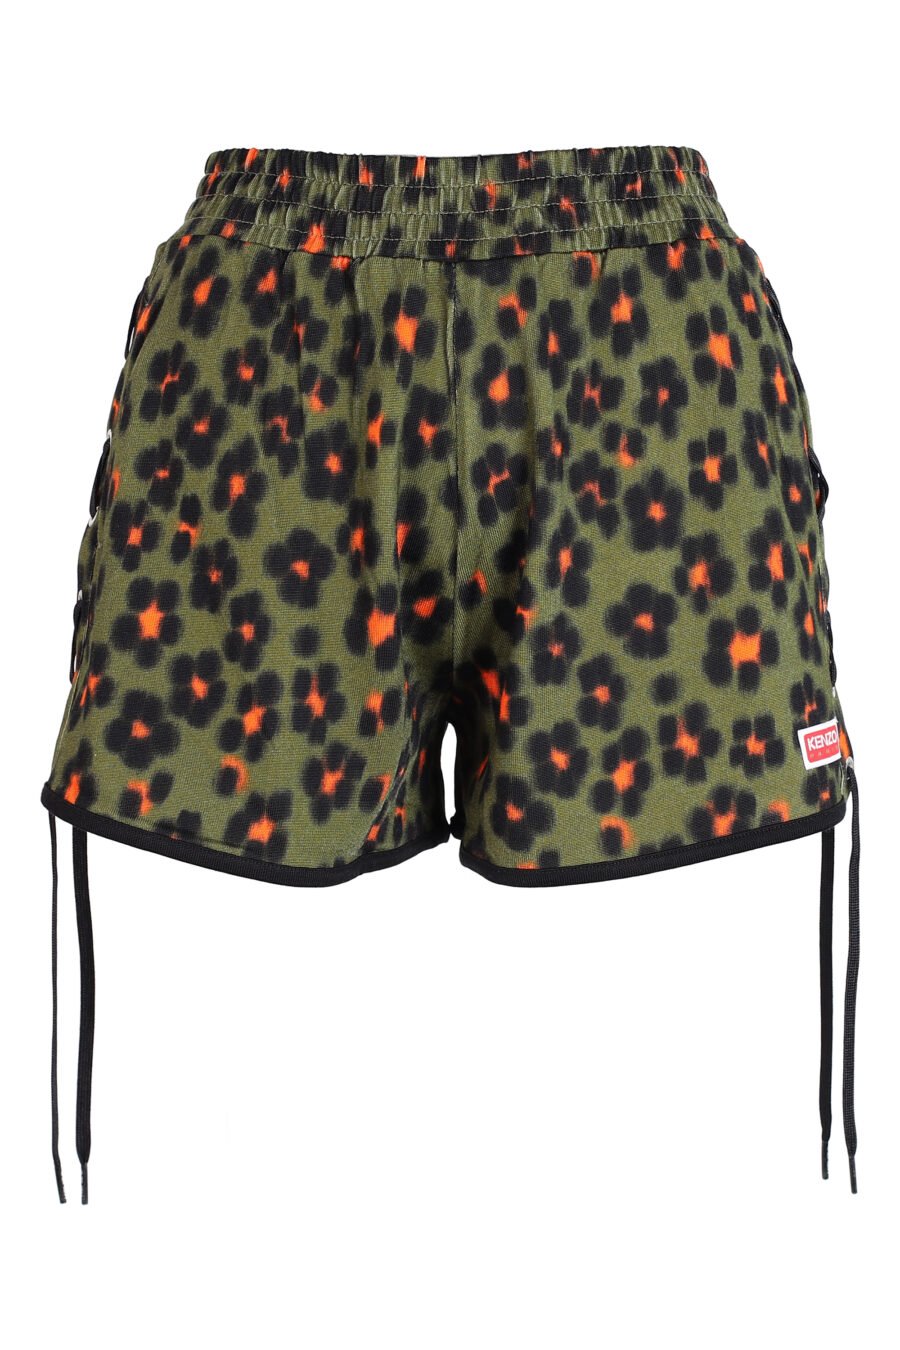 Green shorts with orange leopard print - IMG 3292